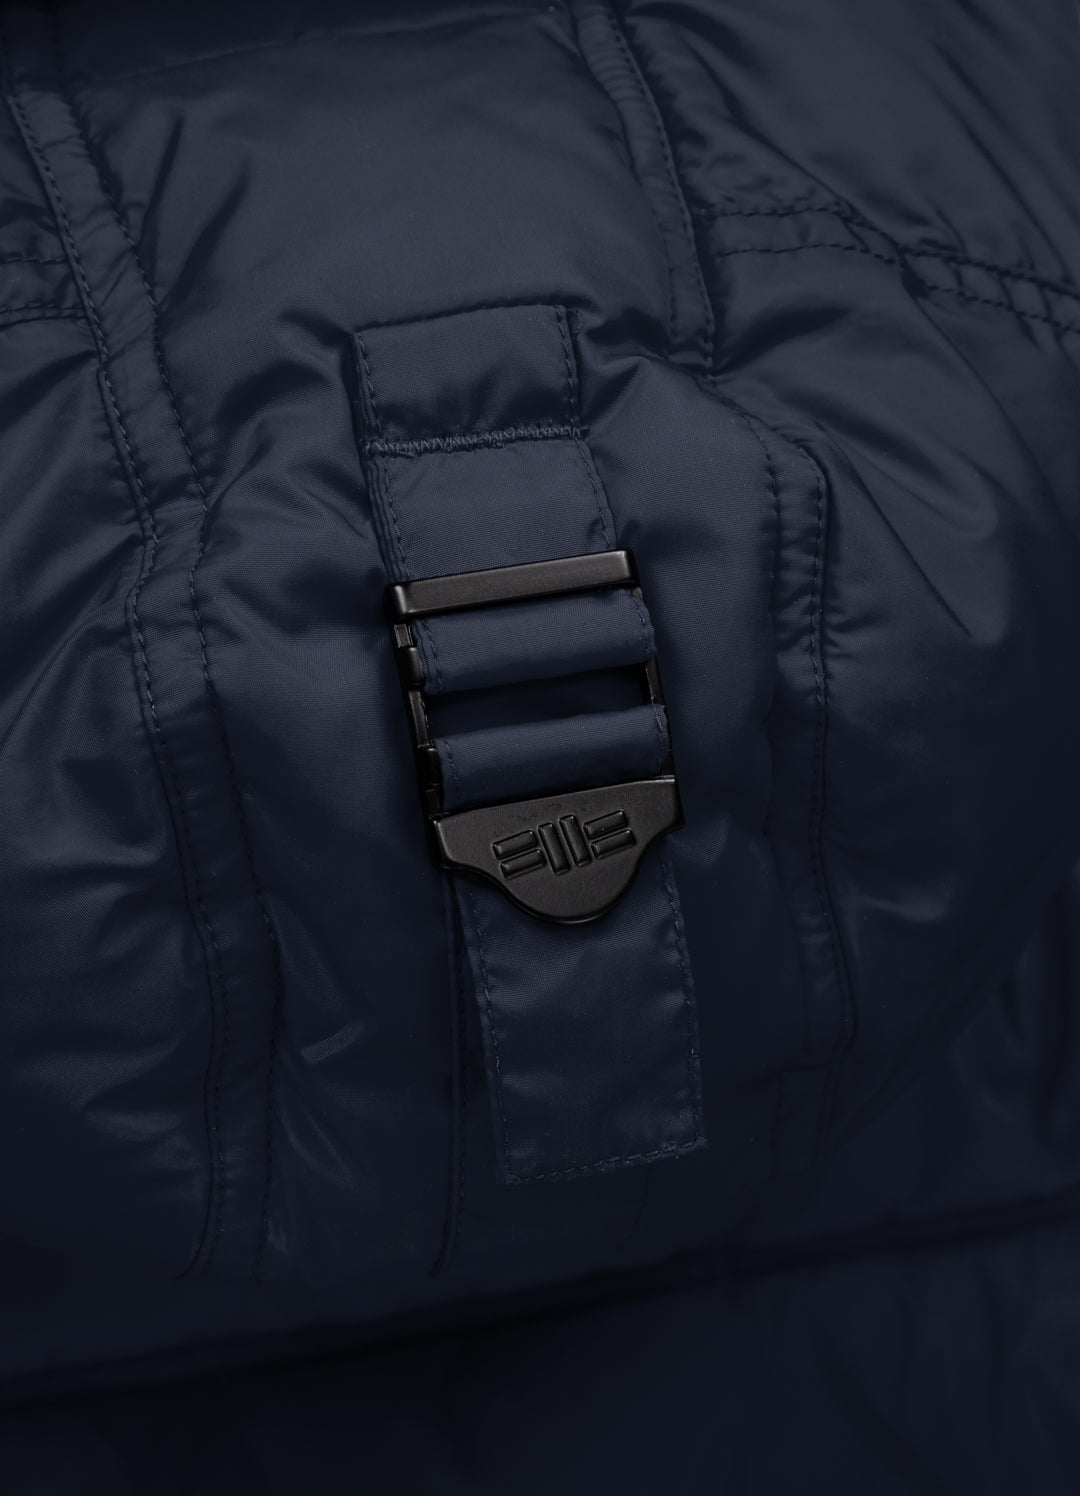 Parka Jacket KINGSTON Dark Navy - Pitbull West Coast International Store 